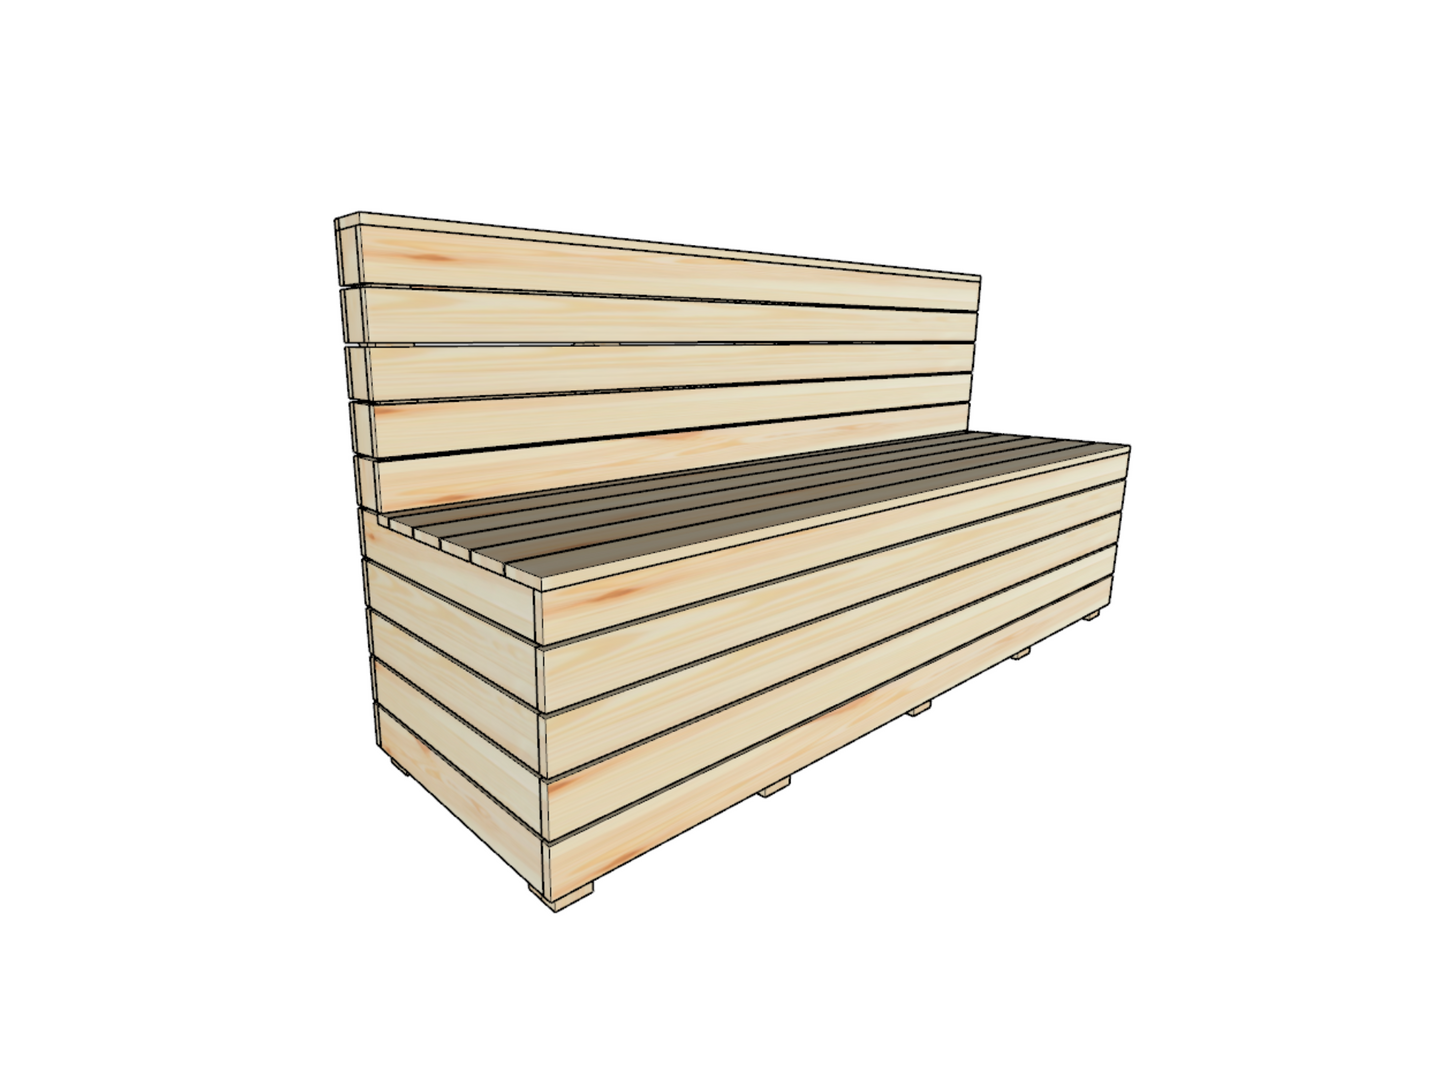 Outdoor Bench - Step-By-Step DIY Construction Guide and Materials List || 2m (6'6") - Garden Seat, Garden Bench, Backyard